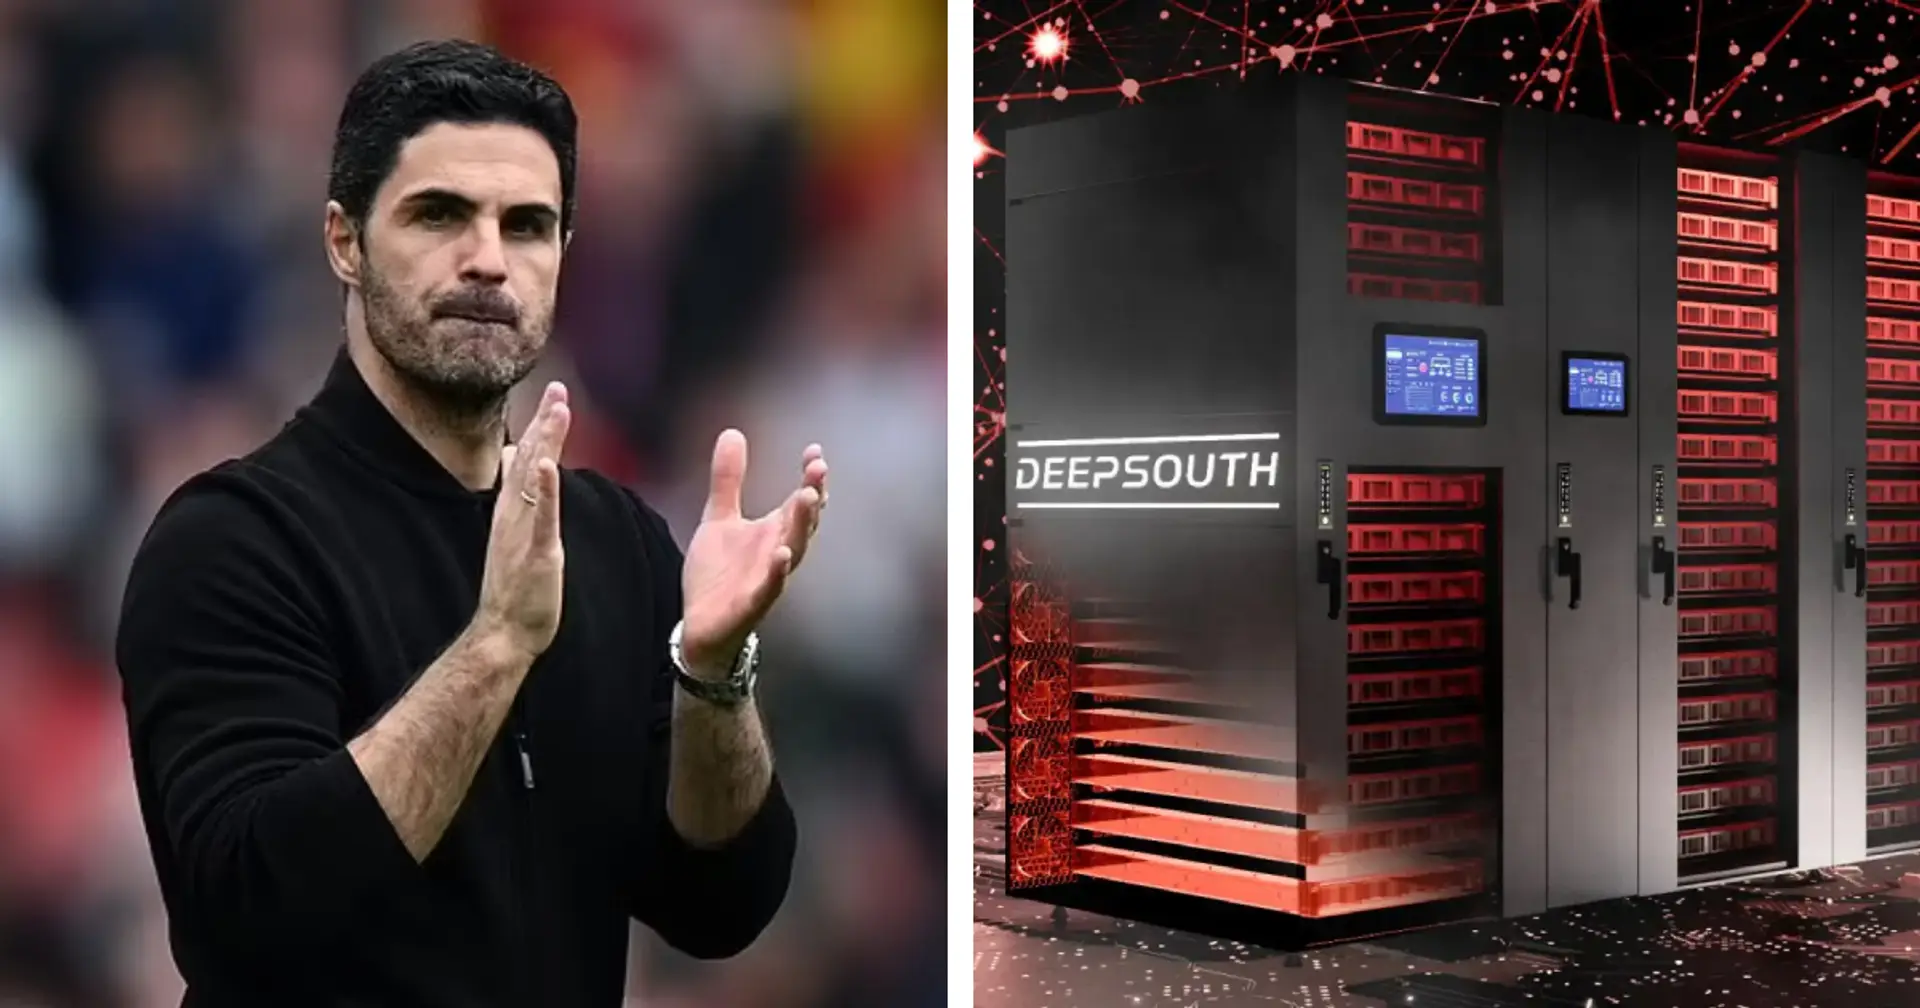 Supercomputer updates Premier League title prediction ahead of final run of fixtures